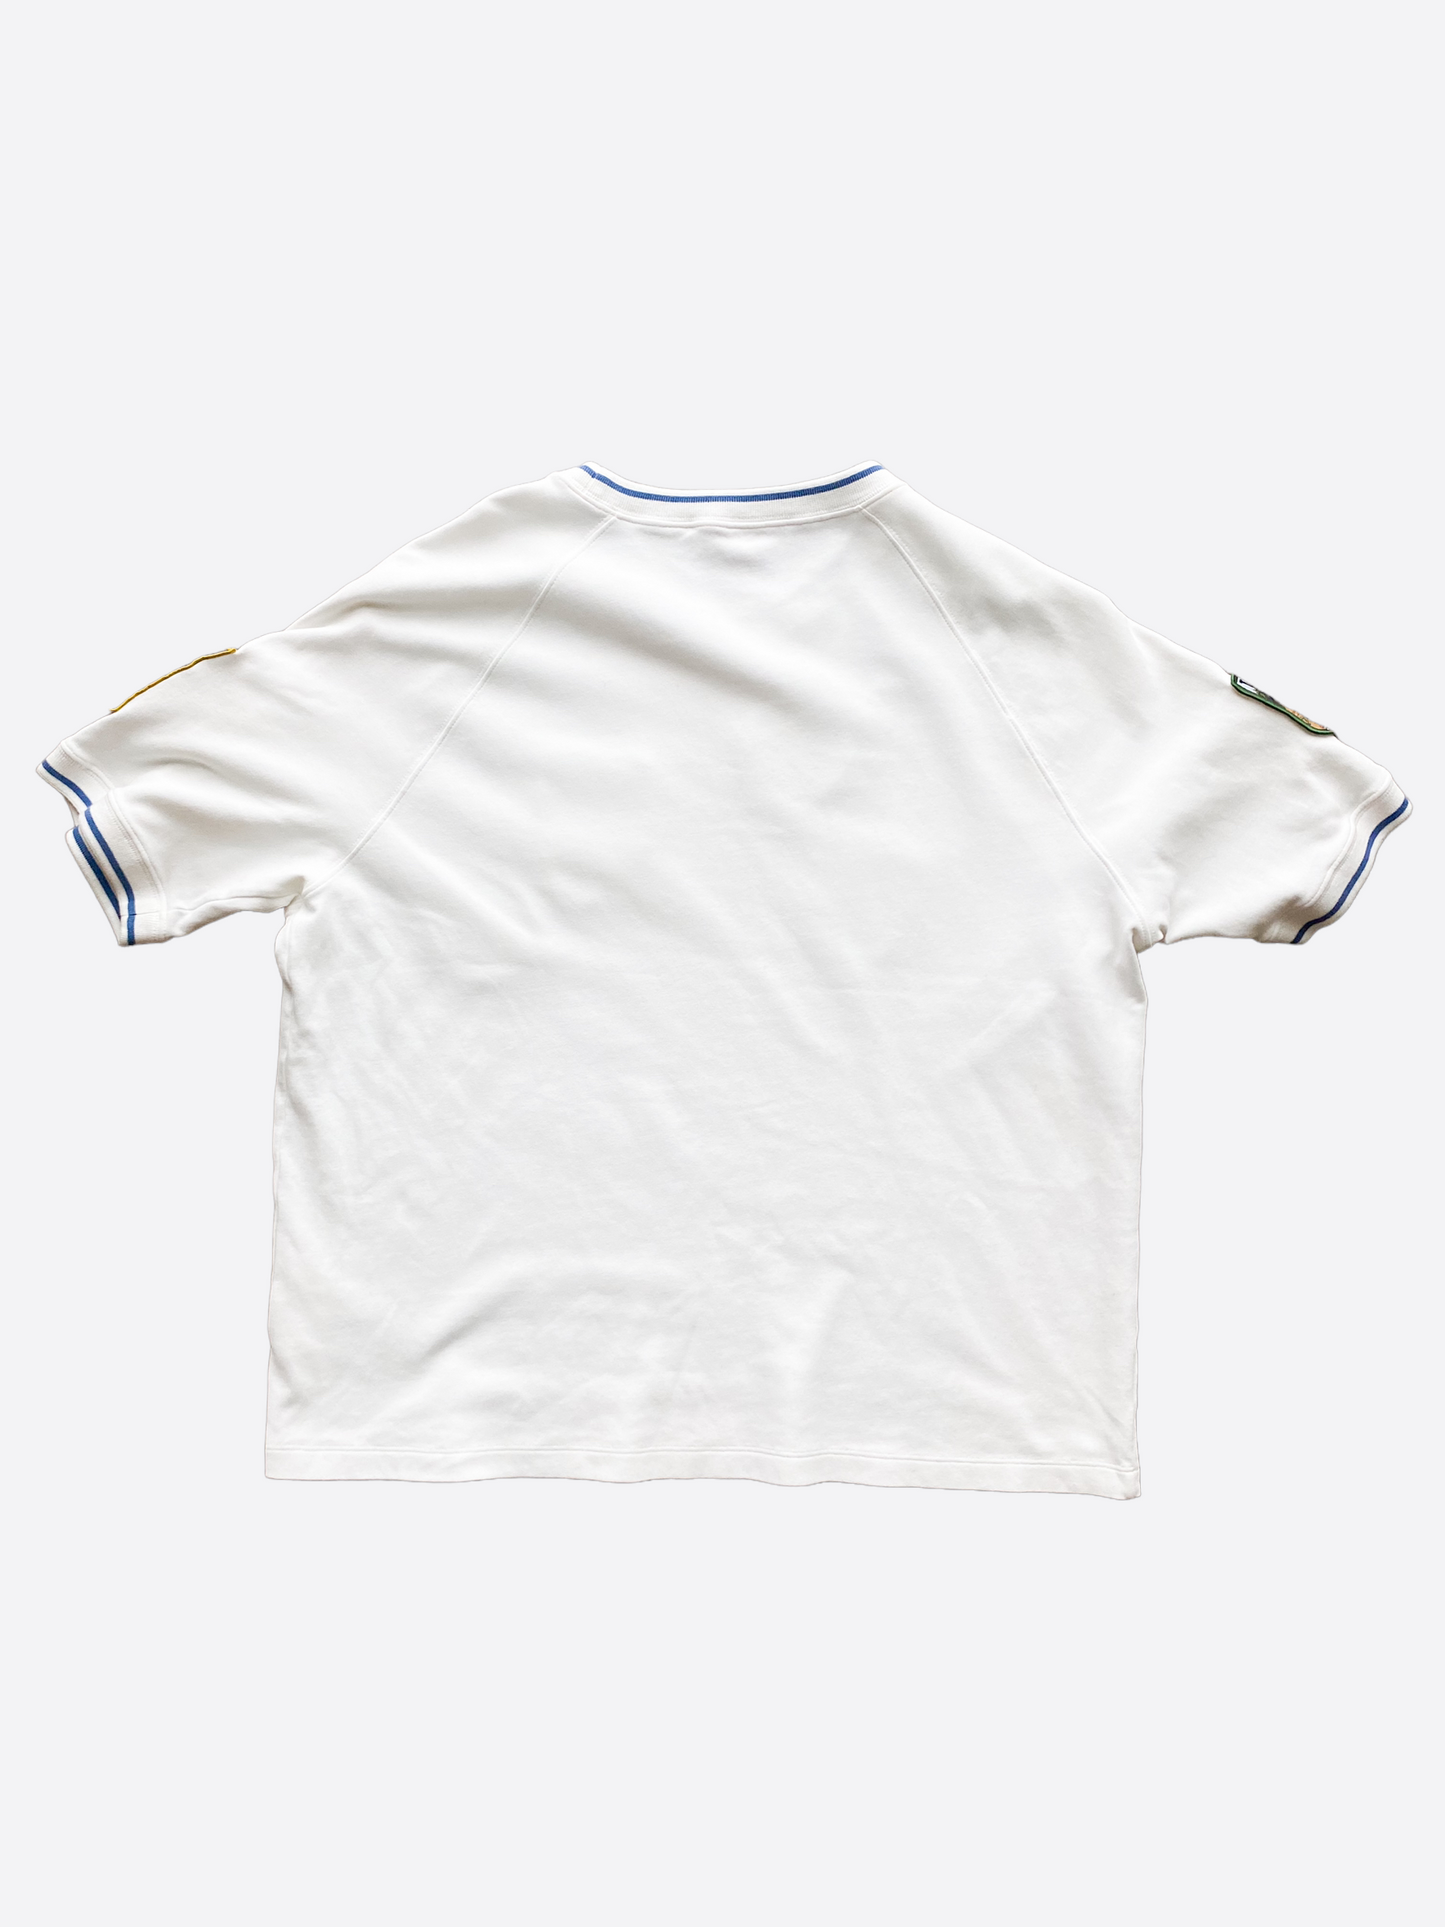 Louis Vuitton VUITTAMINS Patch T-Shirt, White, Xs